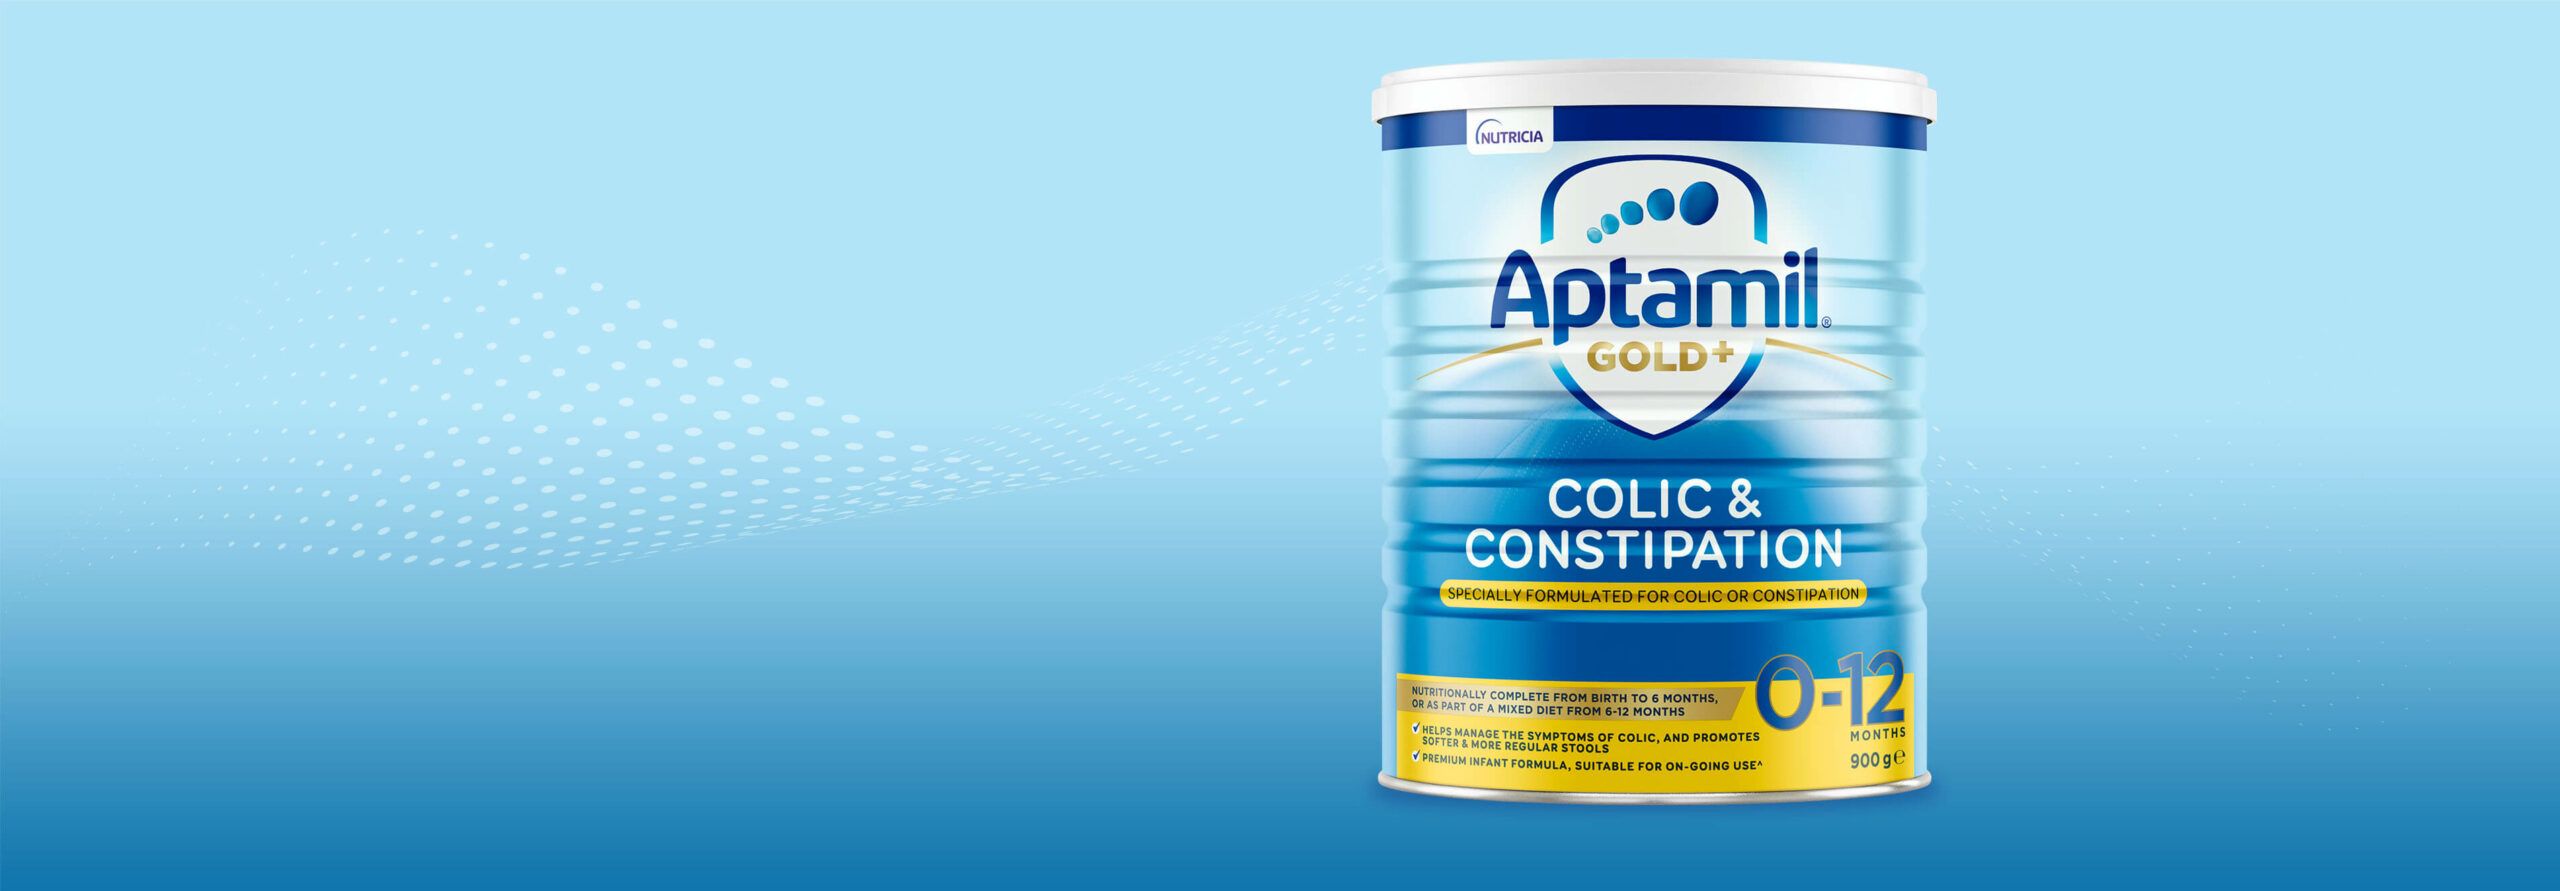 Aptamil-Colic-Gold-plus-Colic-Constipation-Infant-formula-recipe-change-banner-2x-v2